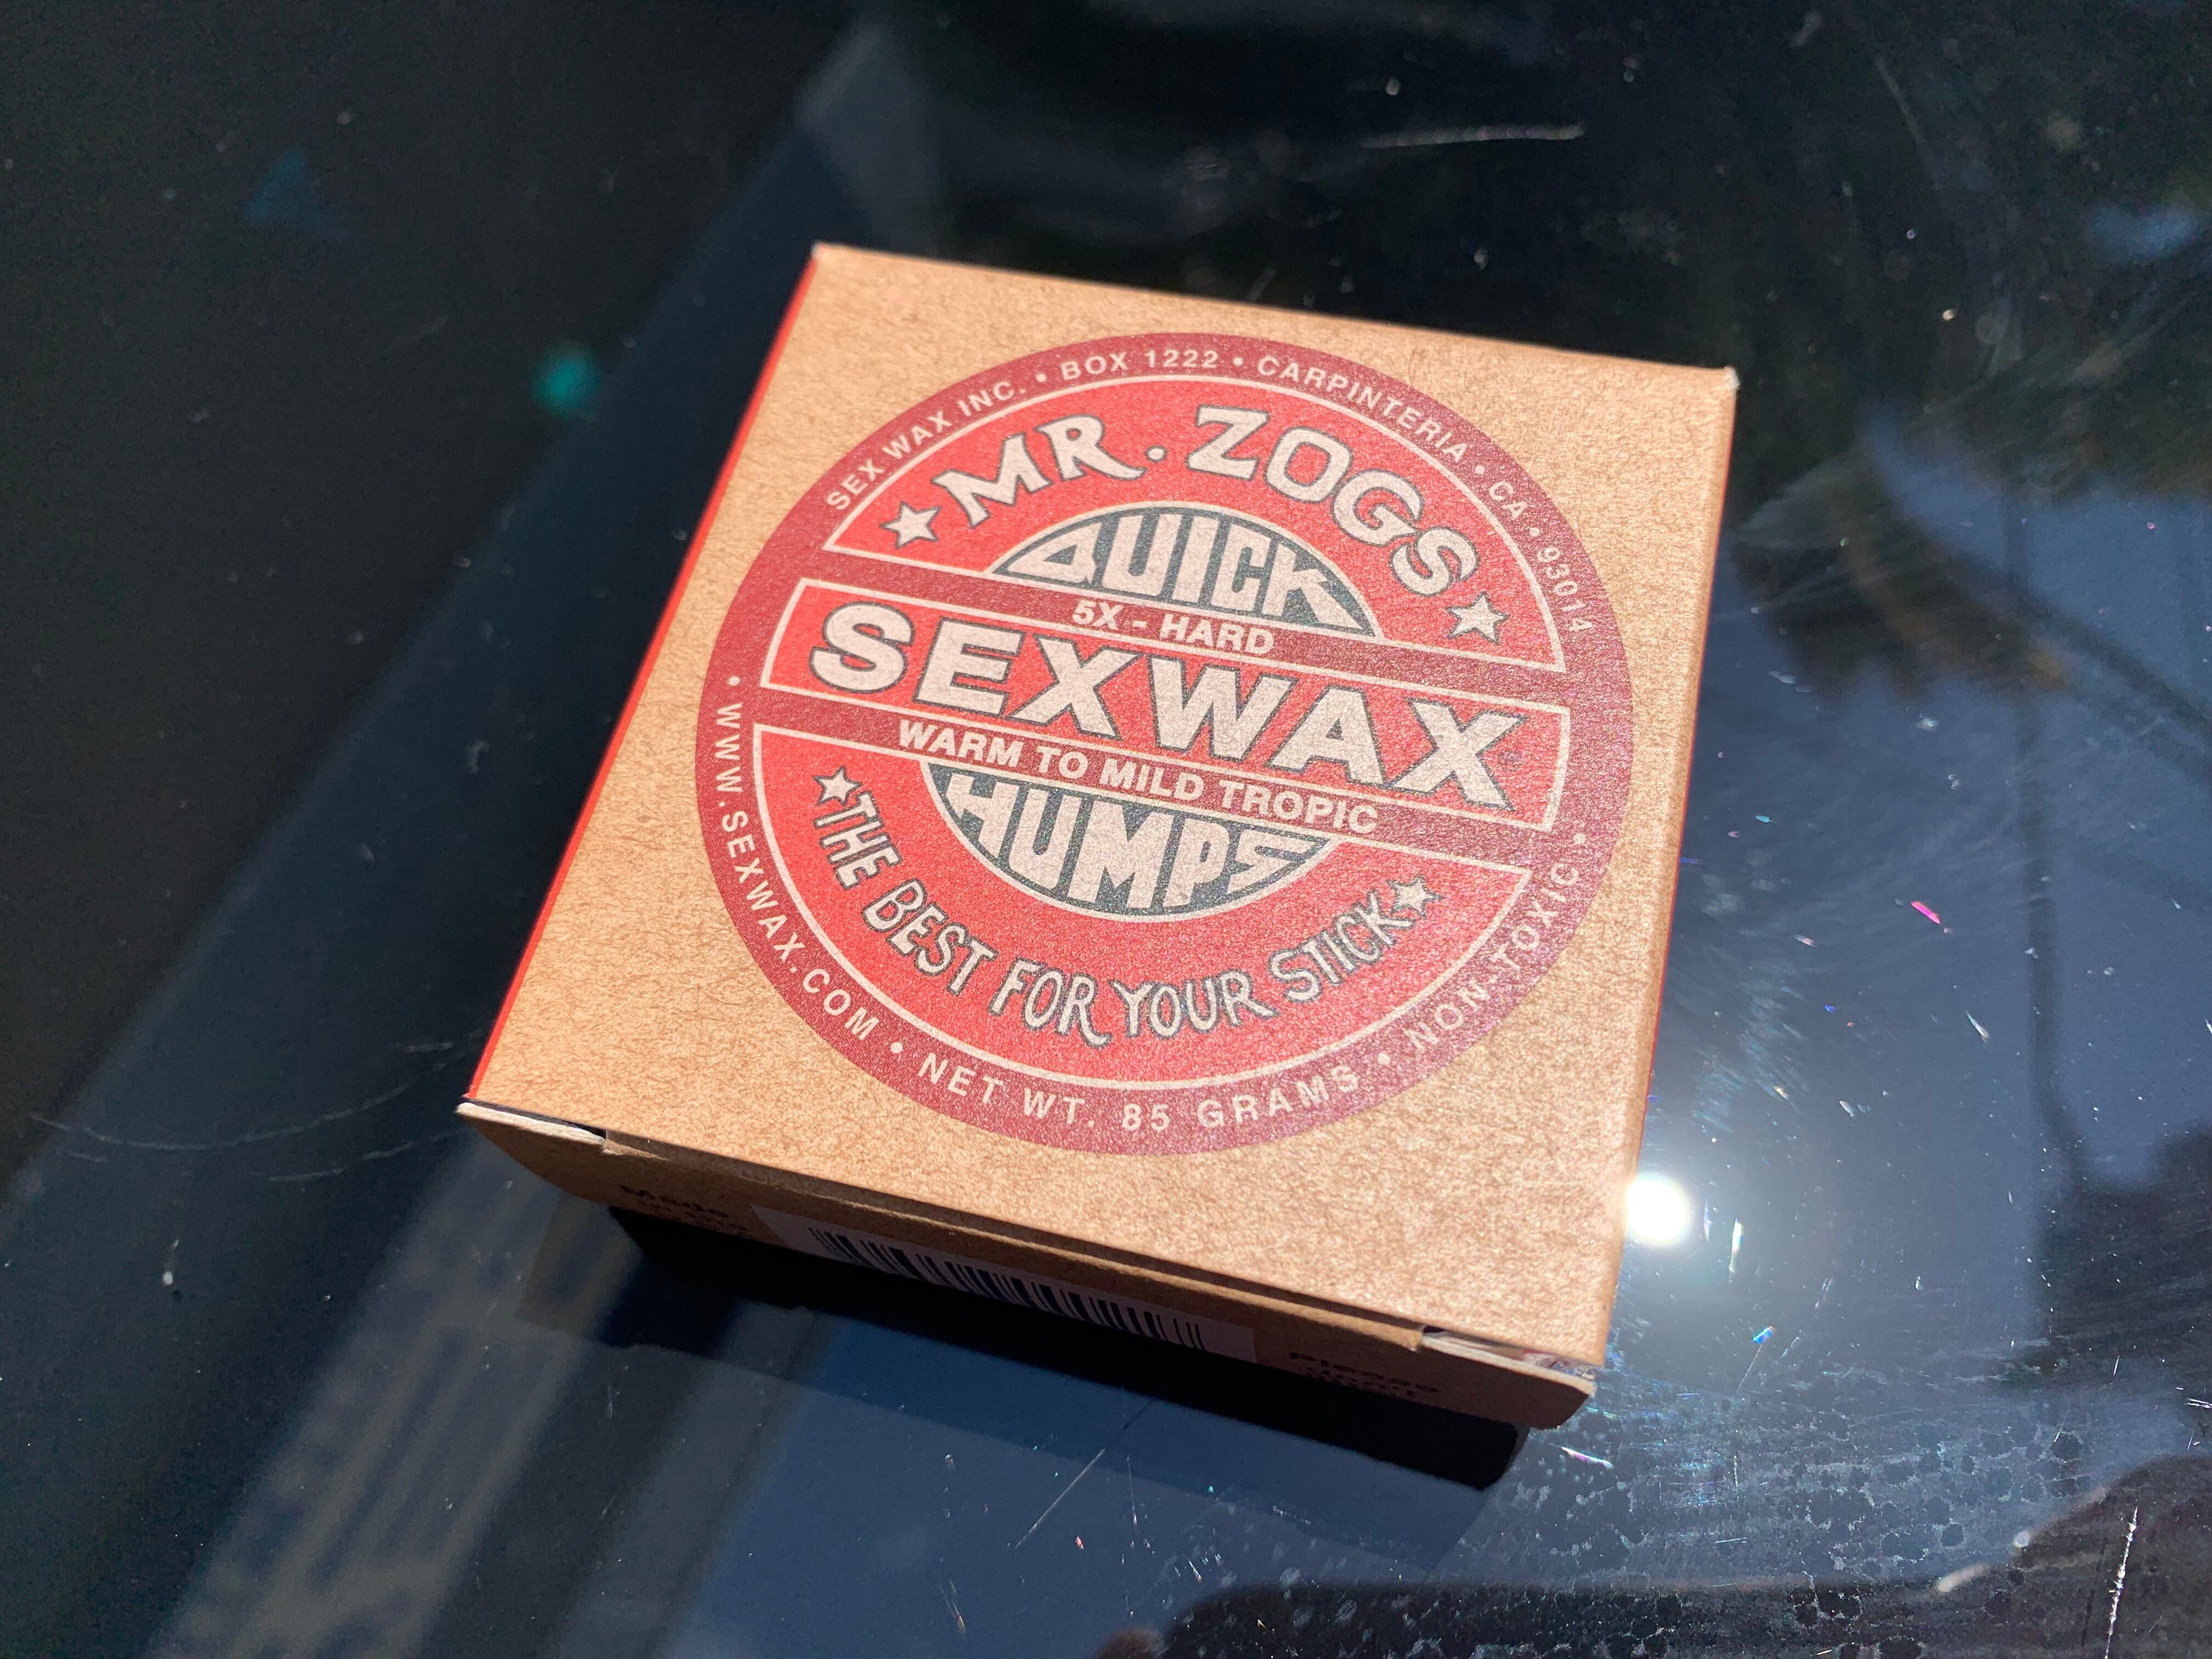 SEX WAX QUICK HUMPS Beach Park Surf Shop